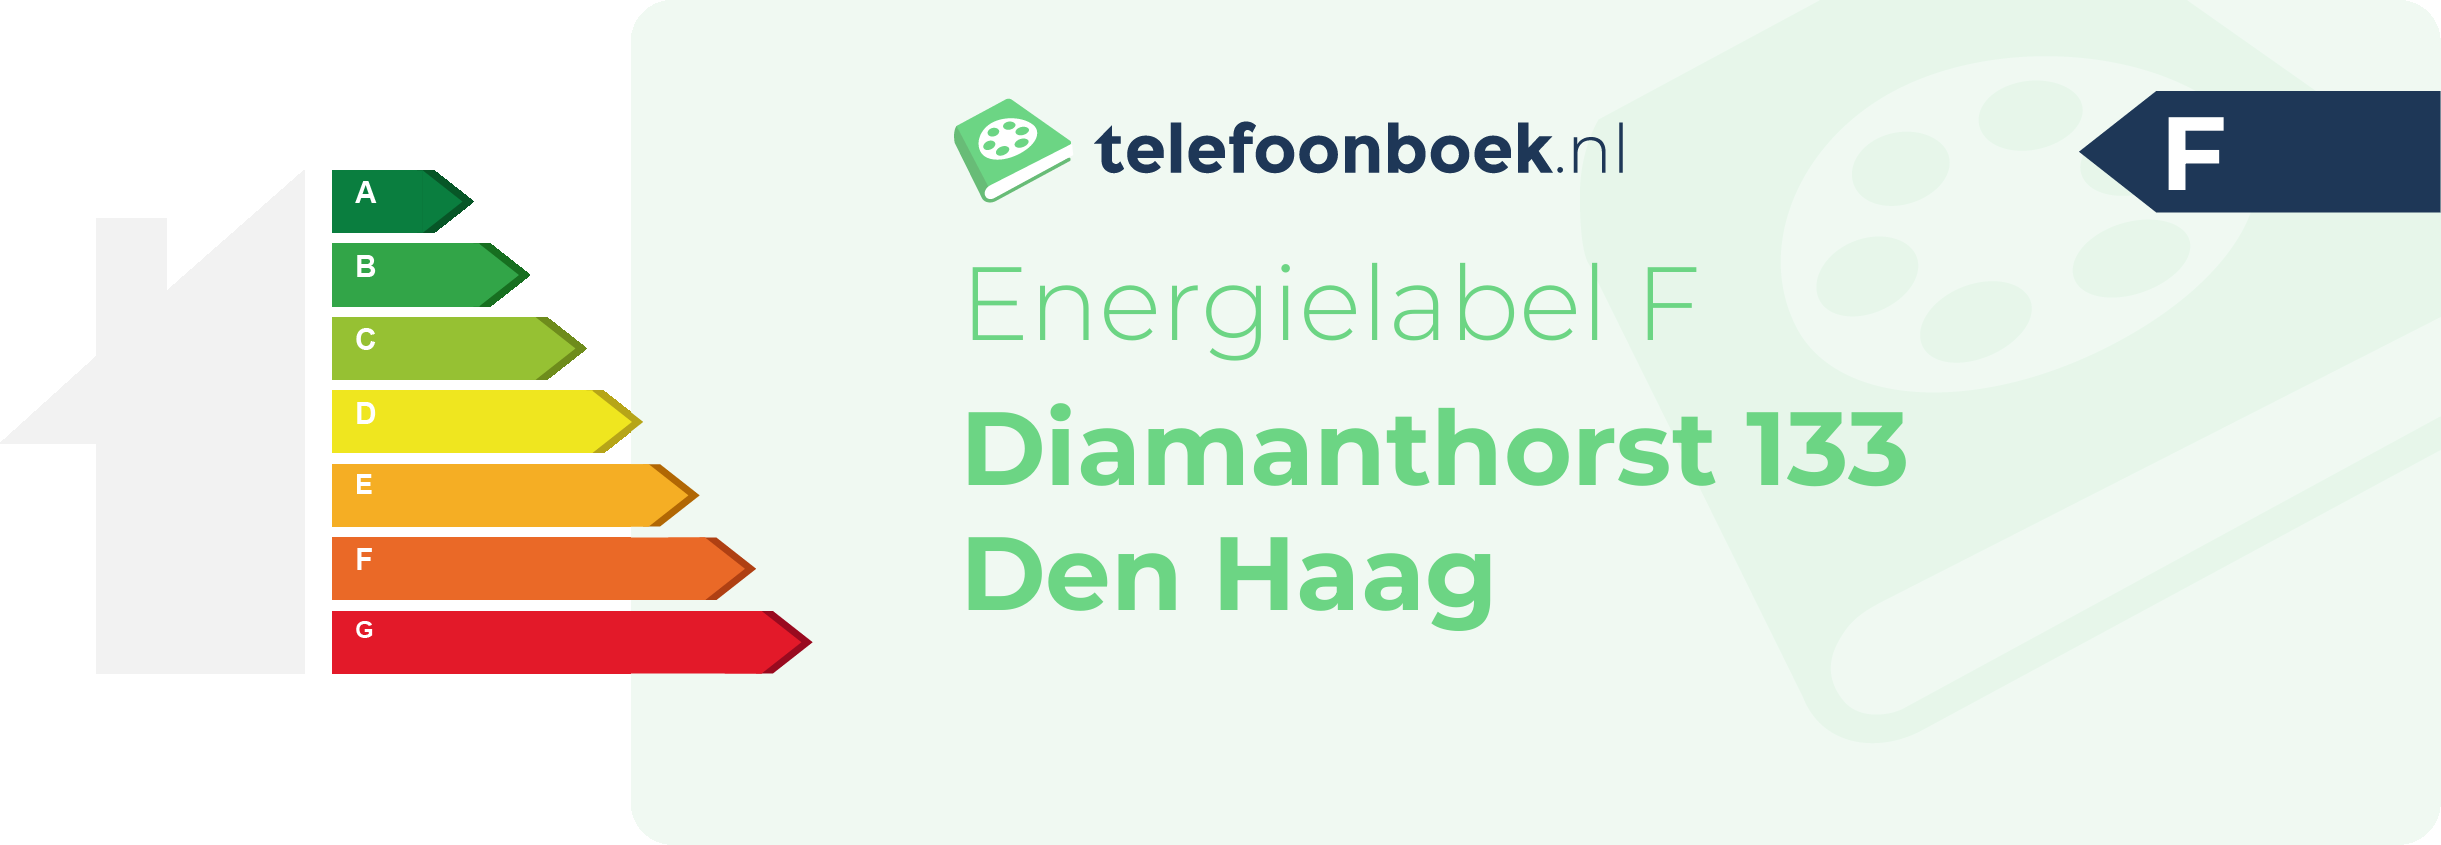 Energielabel Diamanthorst 133 Den Haag